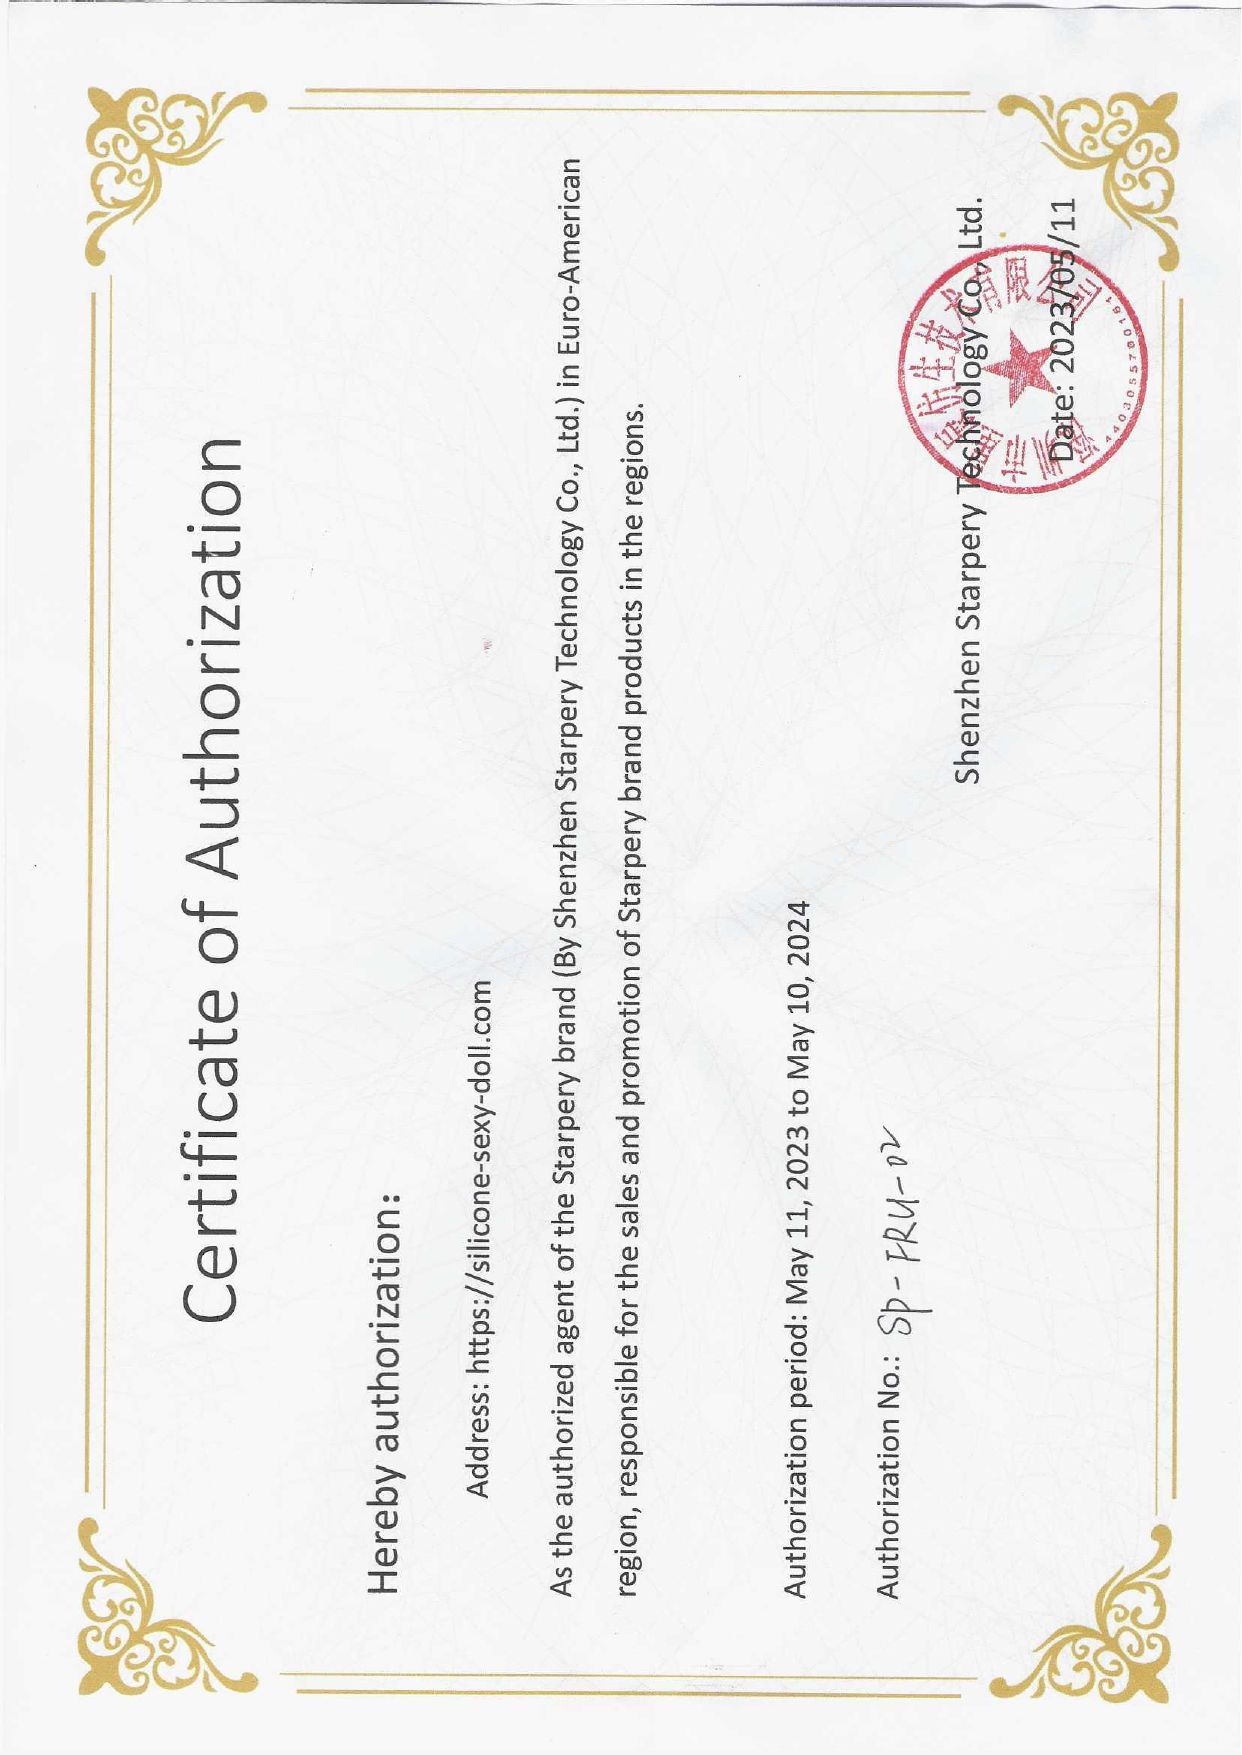 SEDoll Certificate